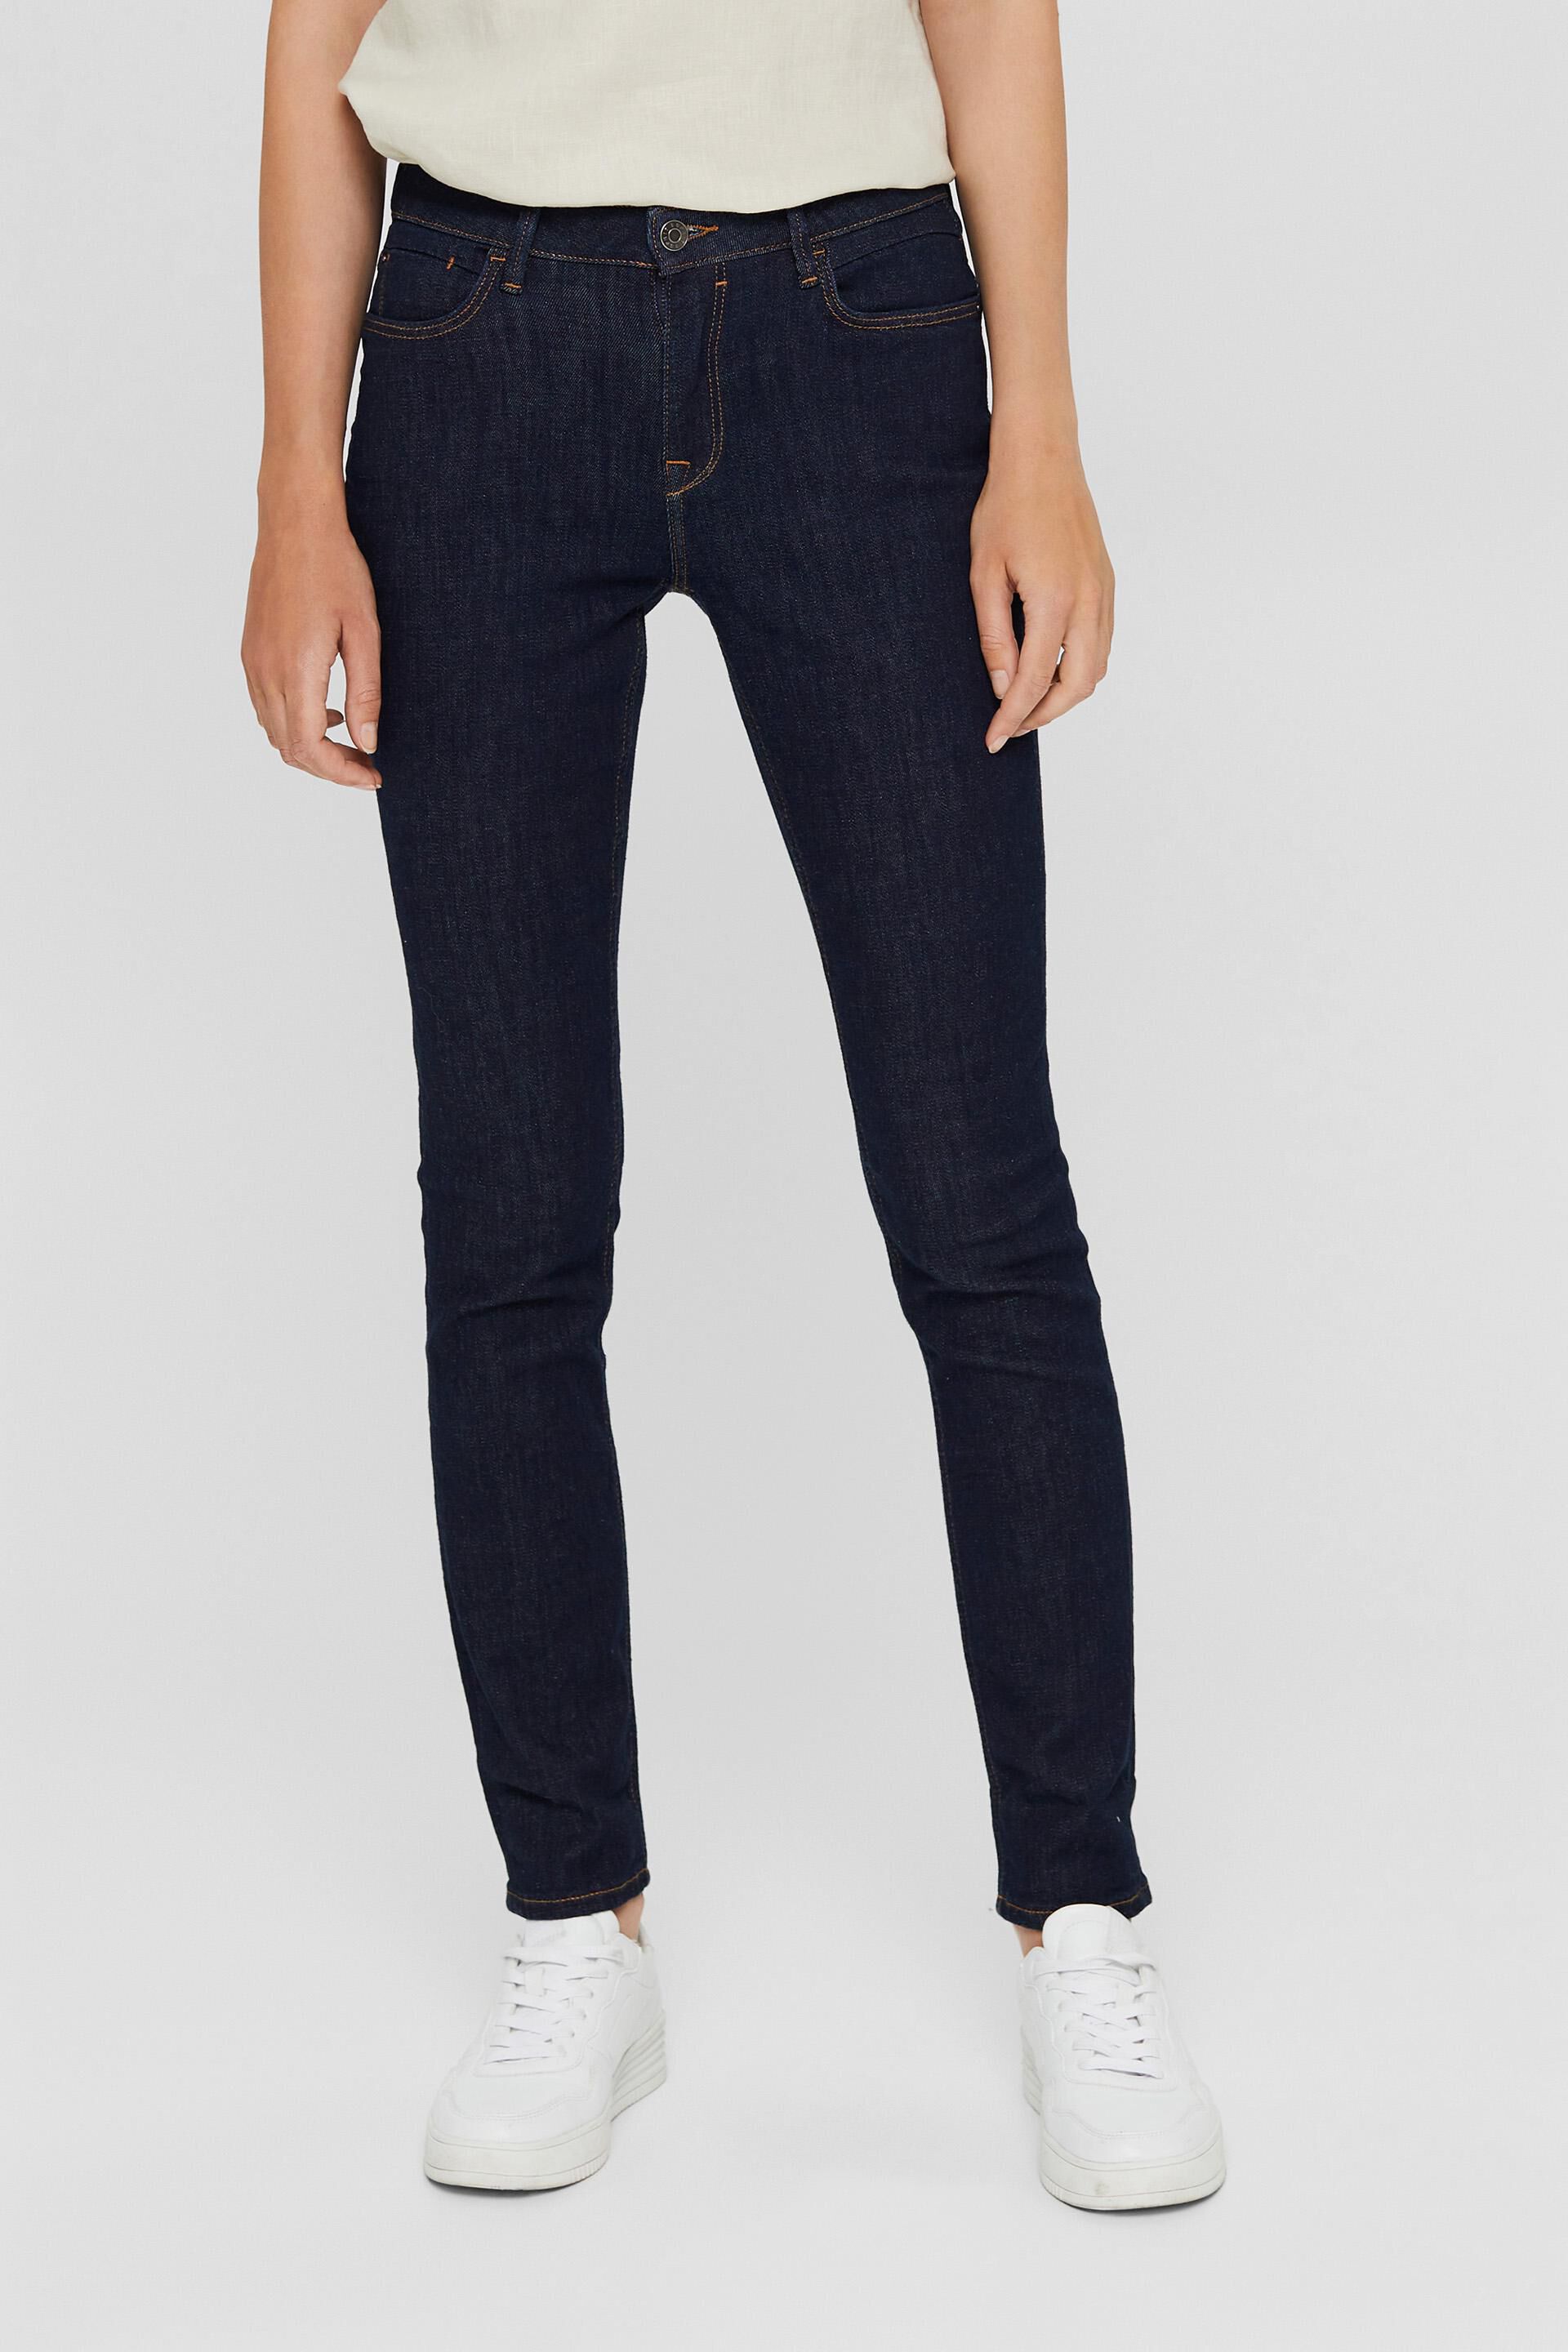 Black 38                  EU WOMEN FASHION Jeans Waxed Lefties Jeggings & Skinny & Slim discount 98% 